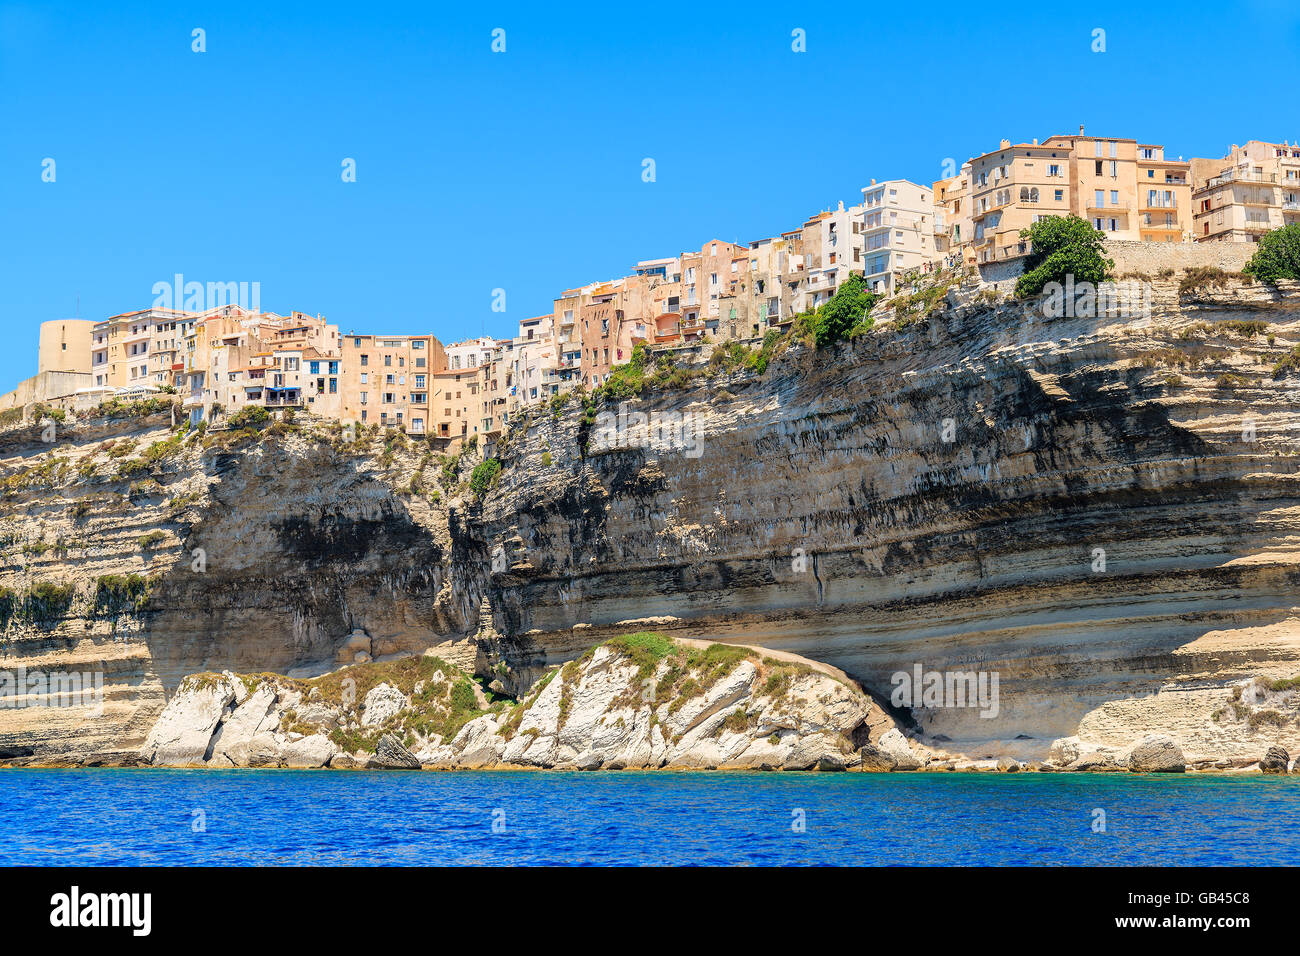 Bonifacio old town built on top of a cliff, Corsica island, France Stock Photo